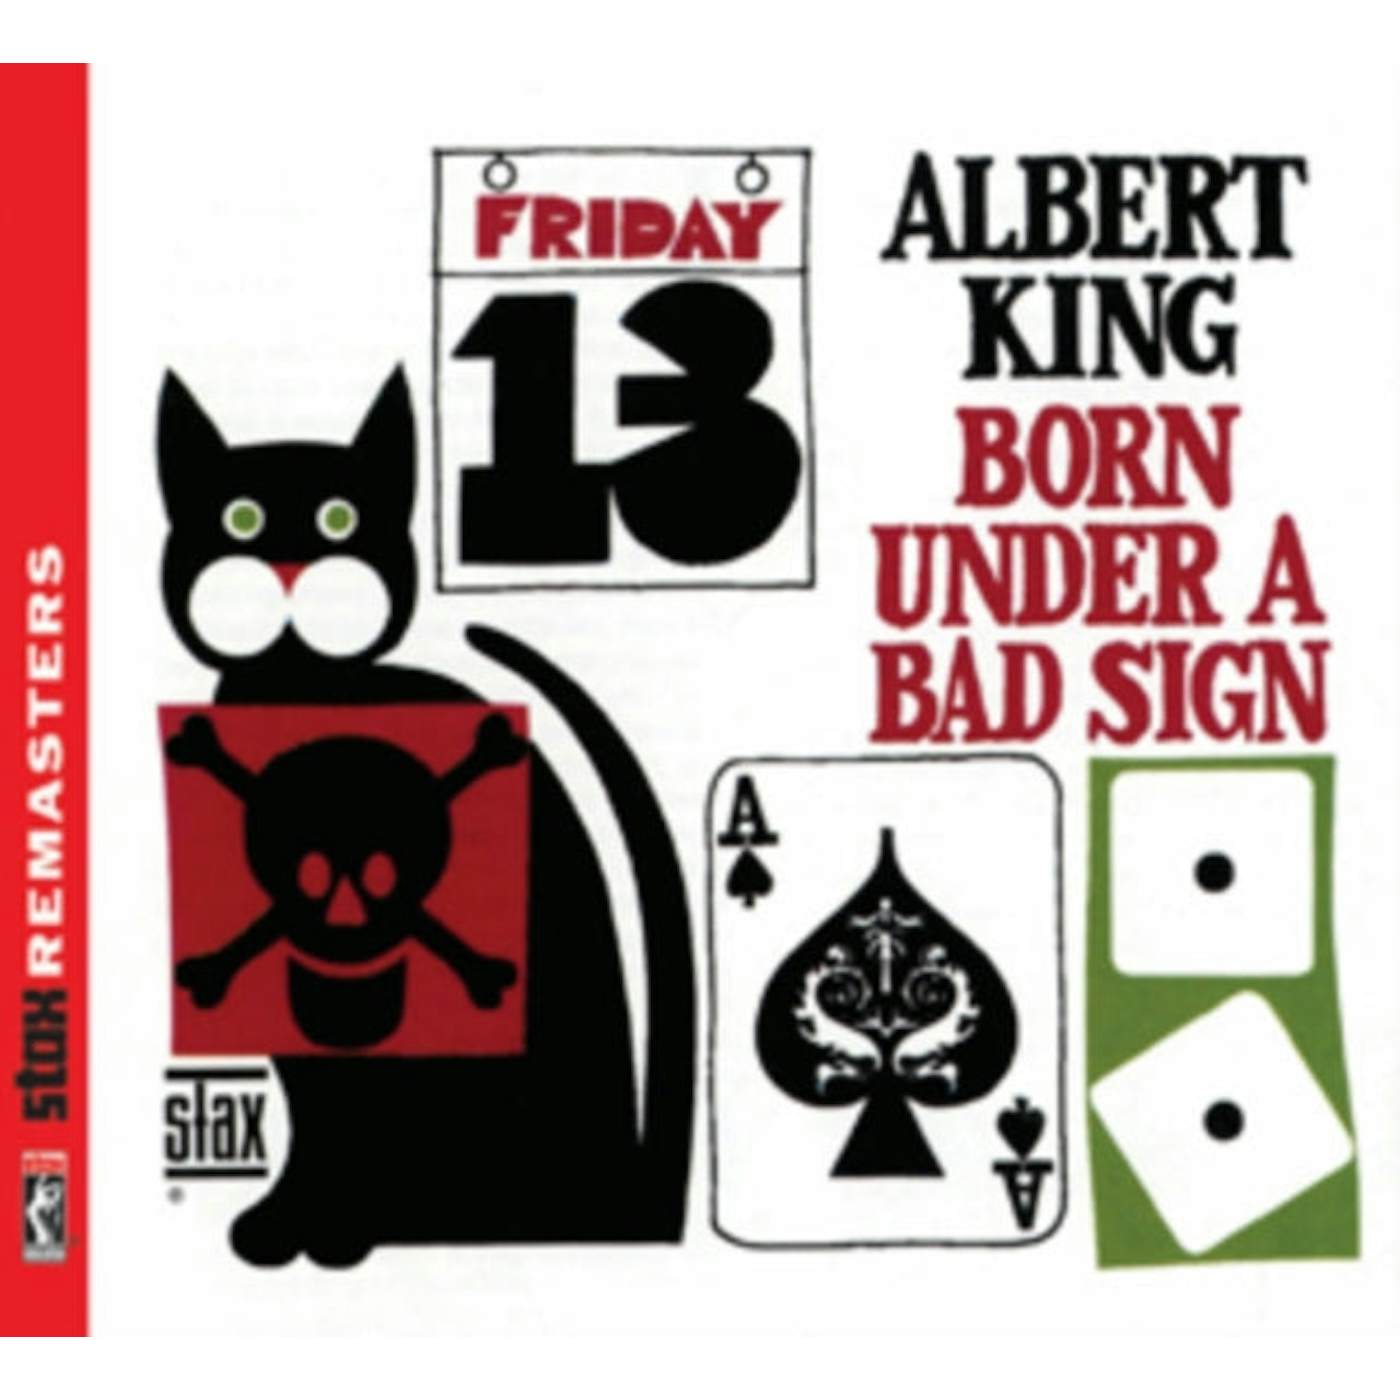 Albert King CD - Born Under A Bad Sign